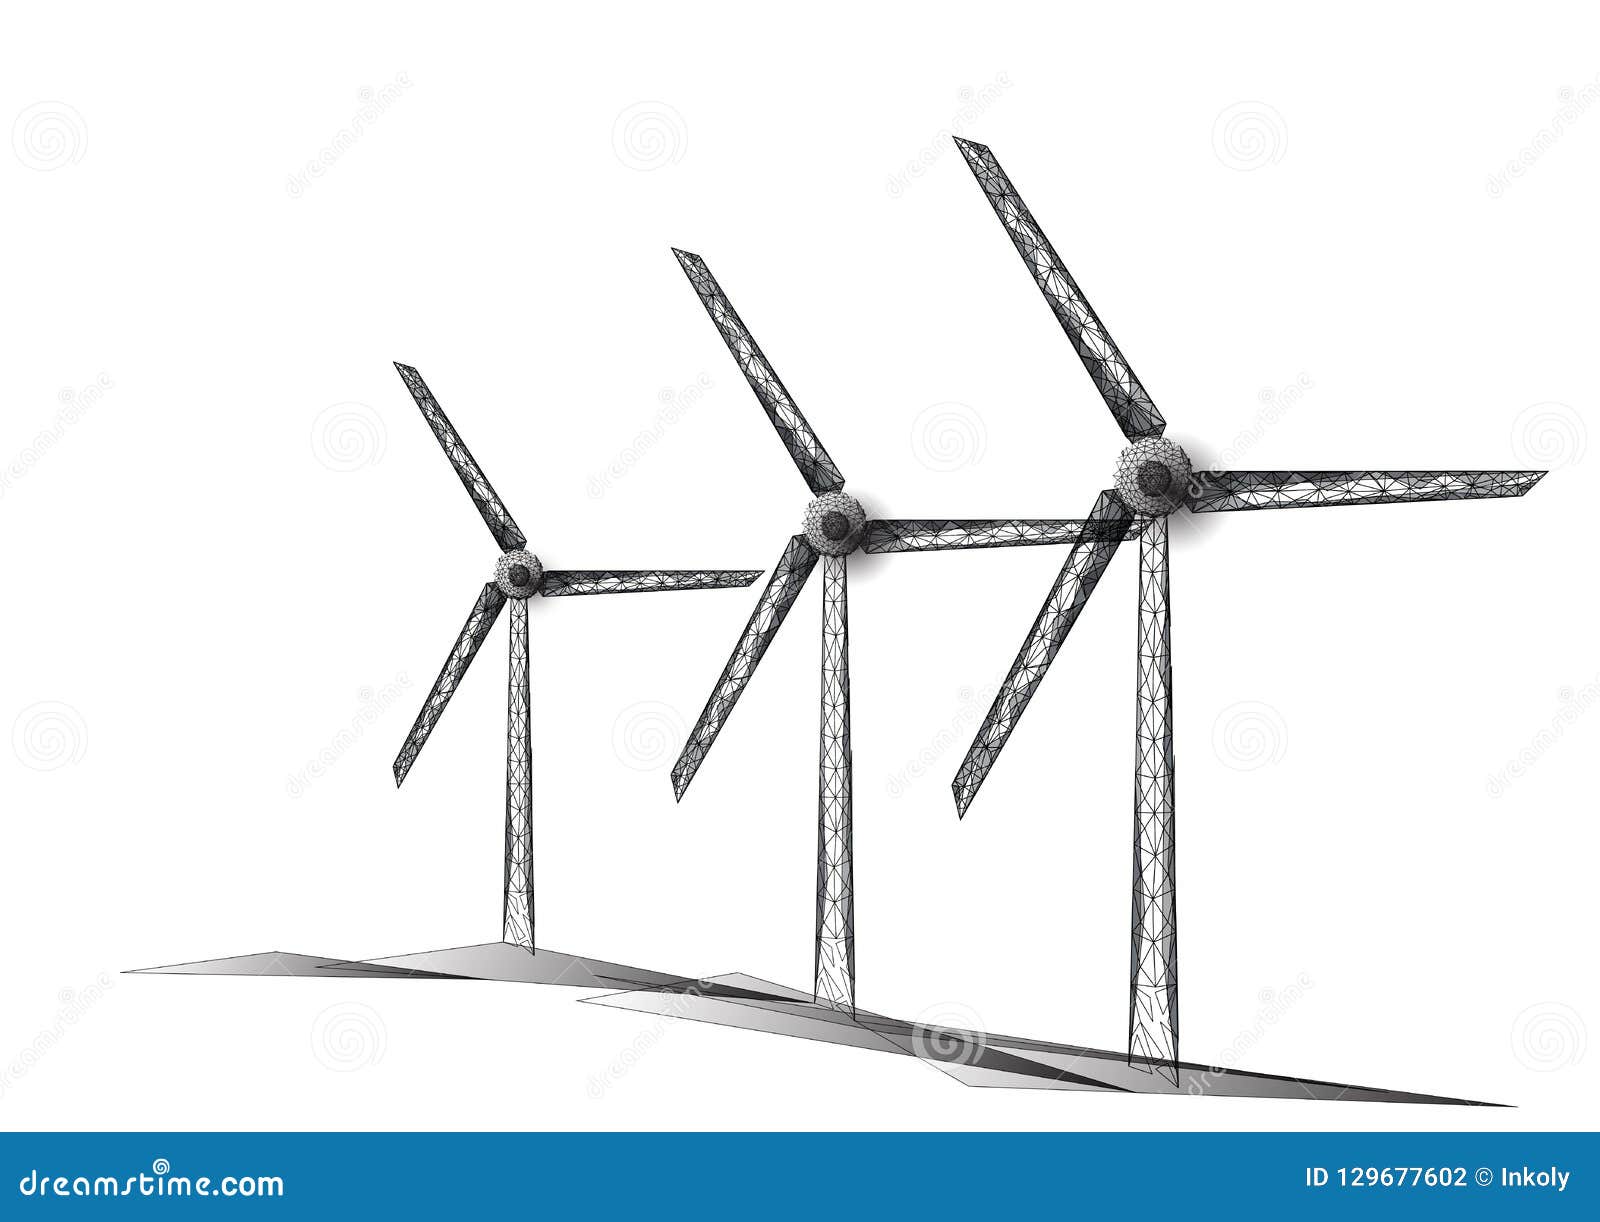 Renewable Alternative Green Energy Generated From Wind Turbine Power ...